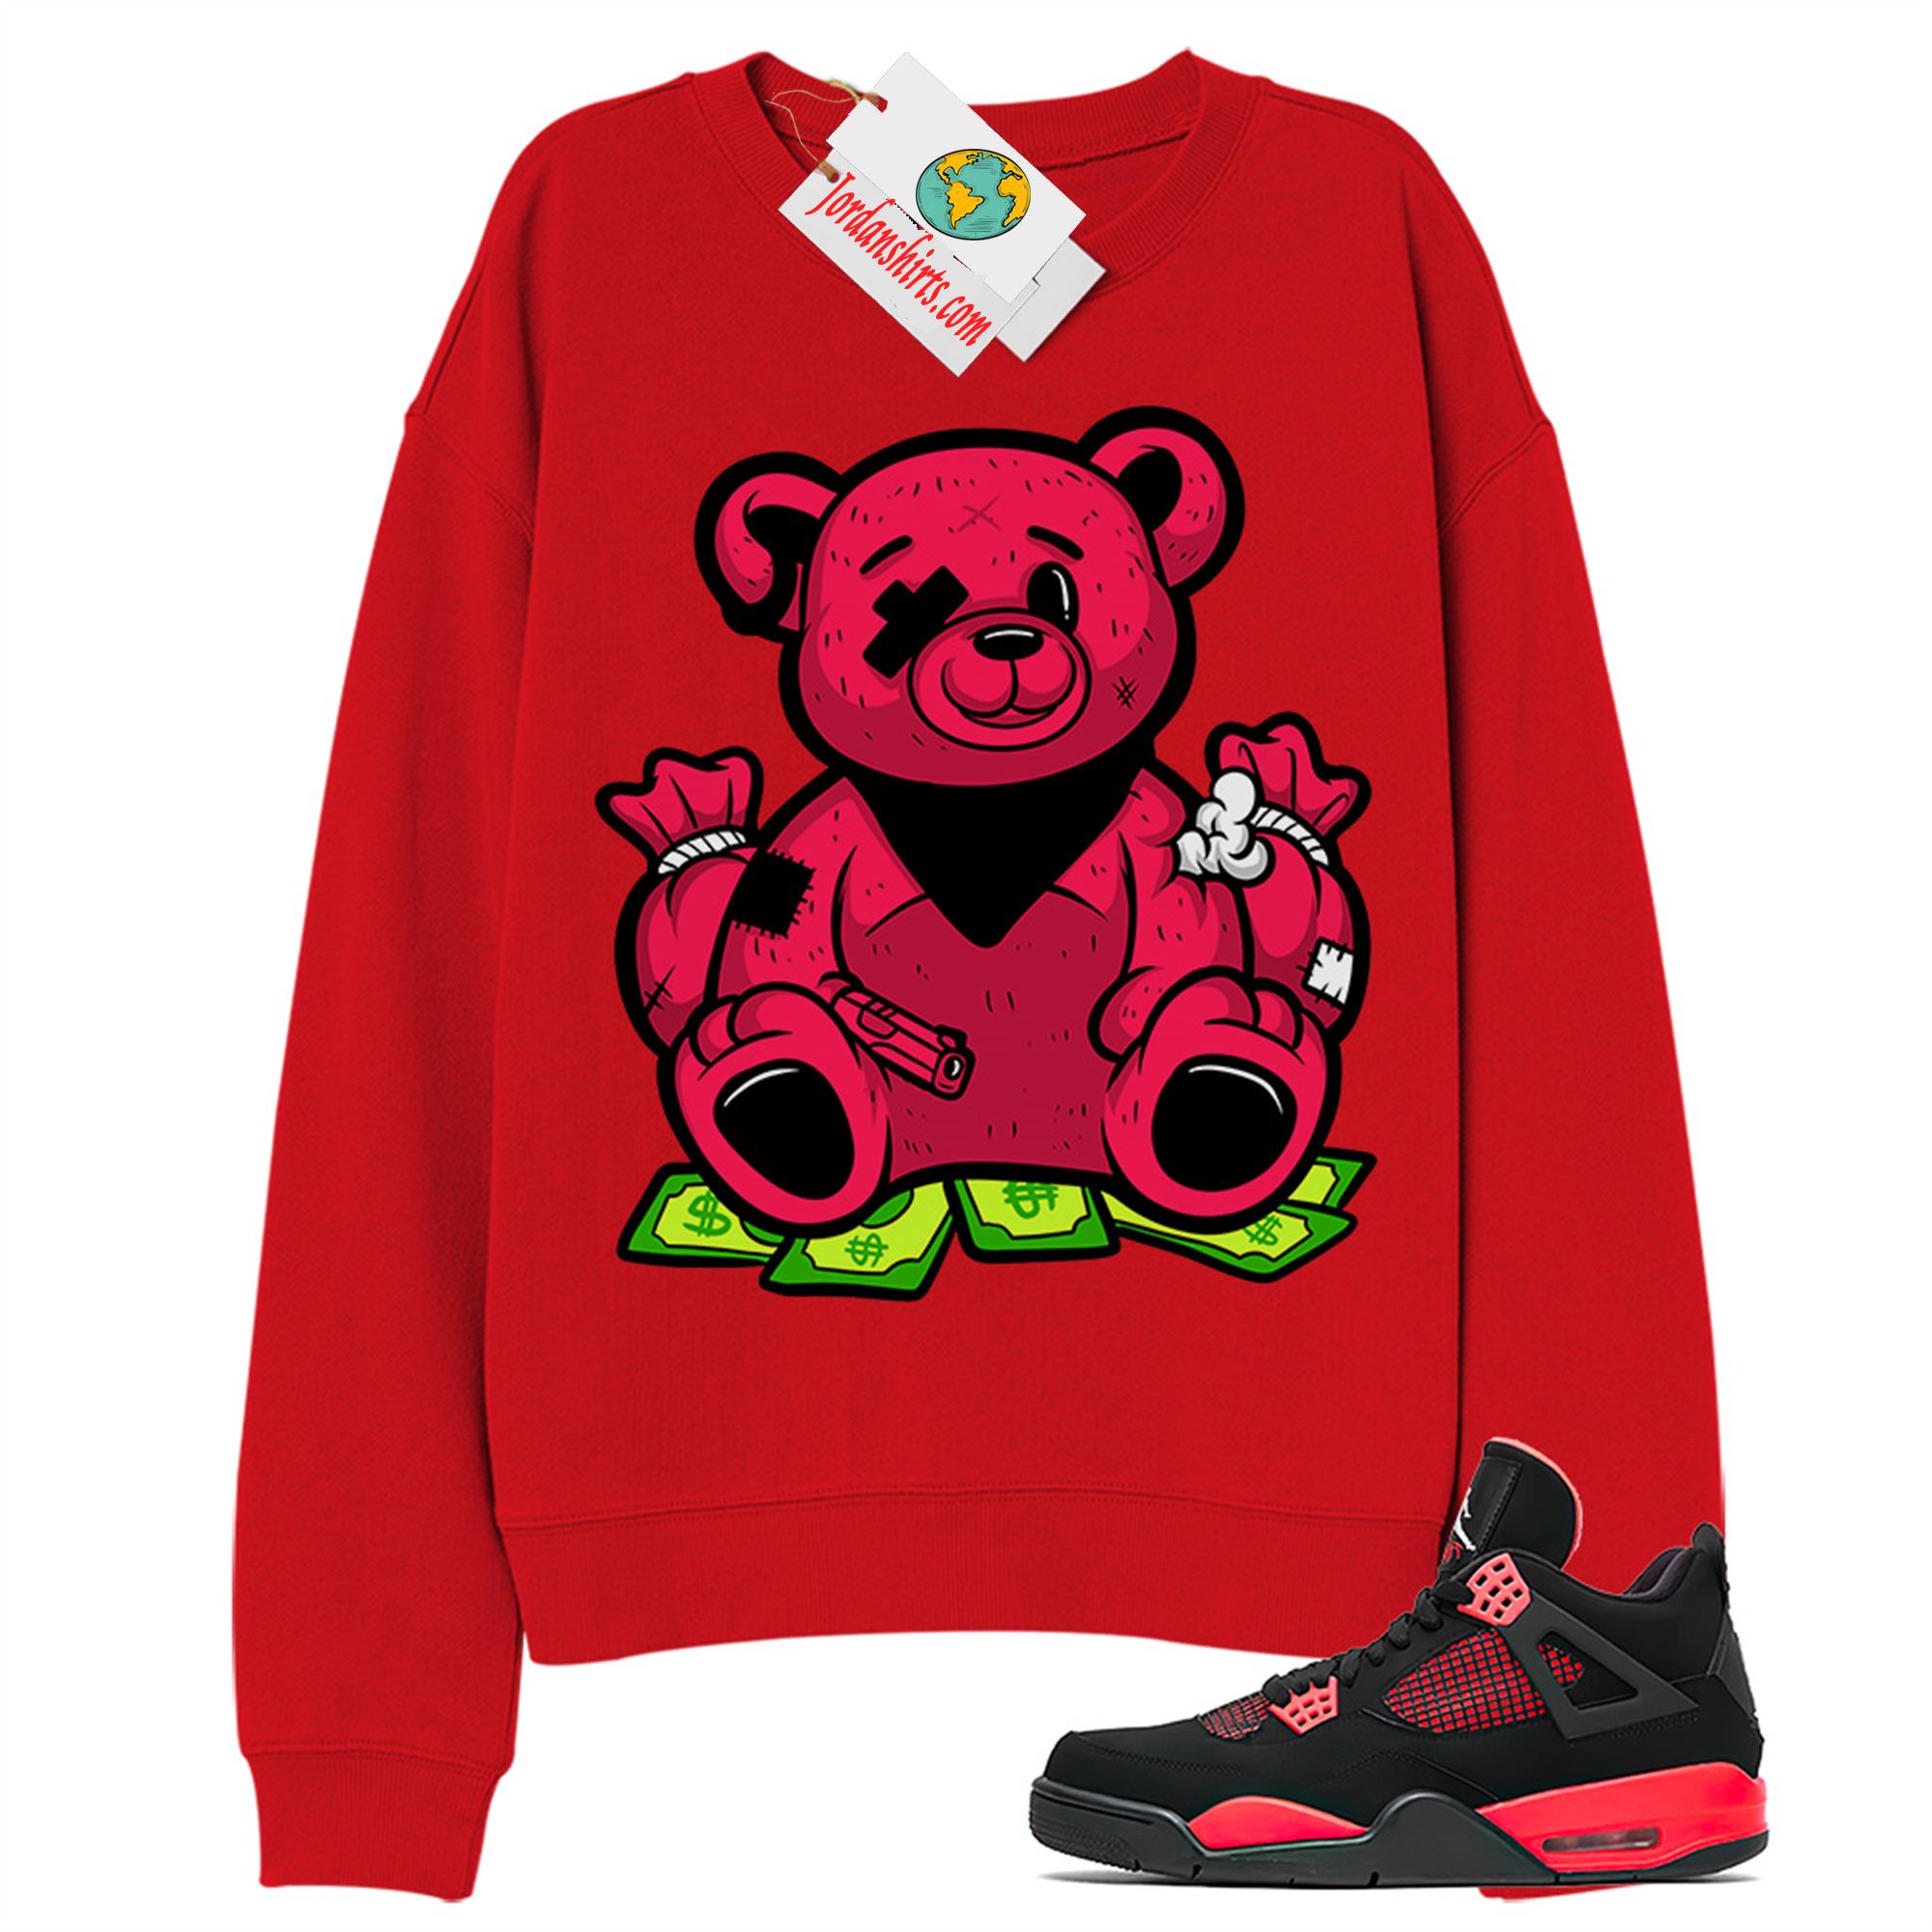 Jordan 4 Sweatshirt, Rich Teddy Bear Gangster Red Sweatshirt Air Jordan 4 Red Thunder 4s Size Up To 5xl